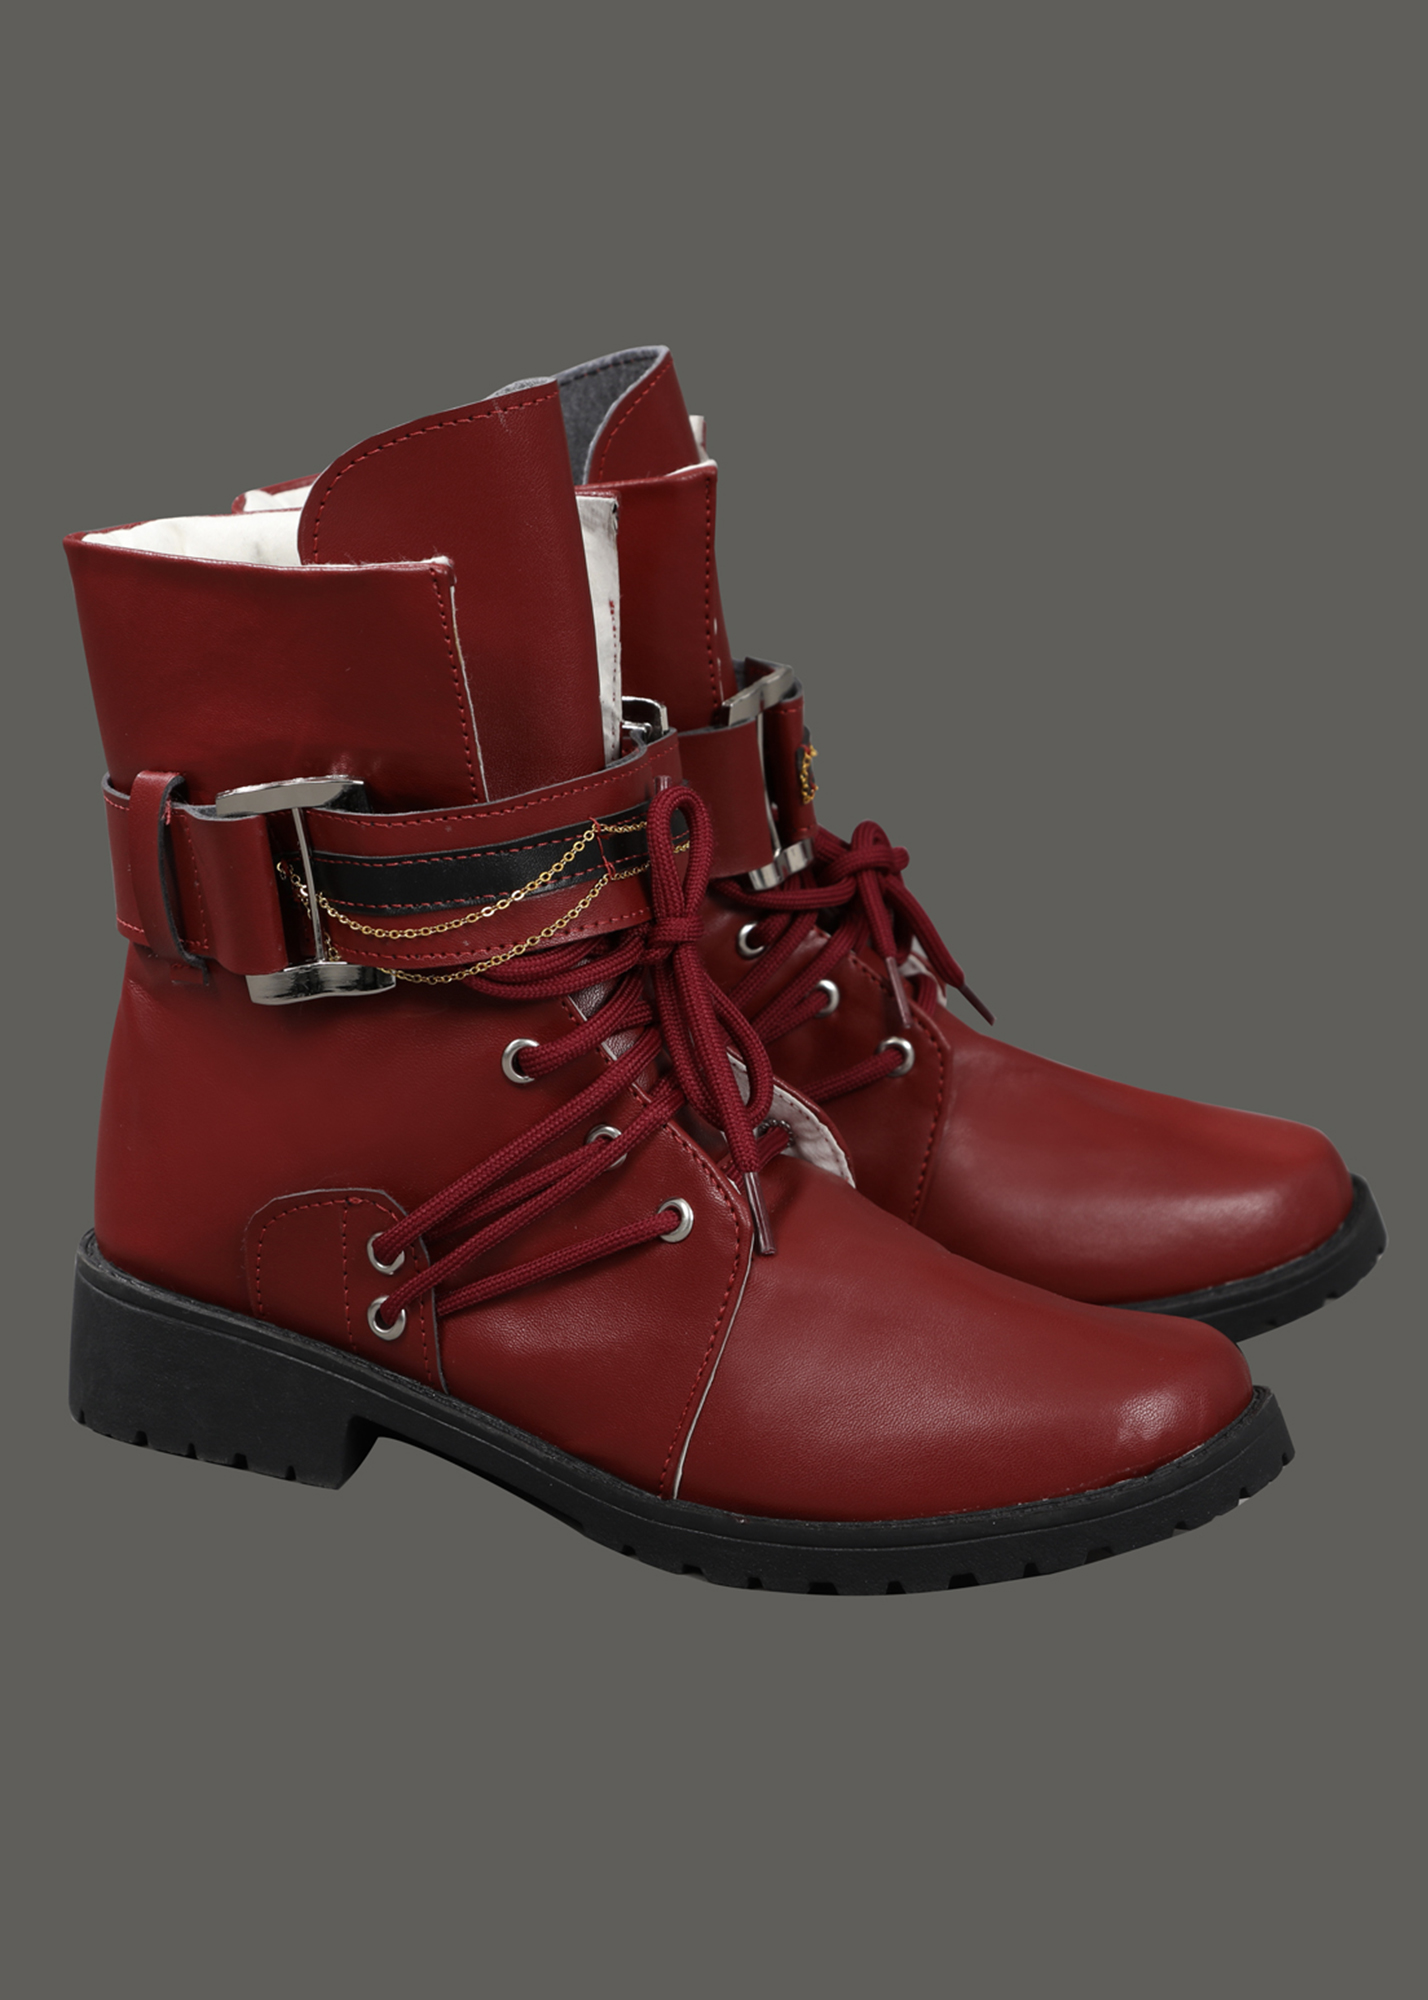 Final Fantasy VII Rebirth Shoes Women Tifa Lockhart Boots Cosplay